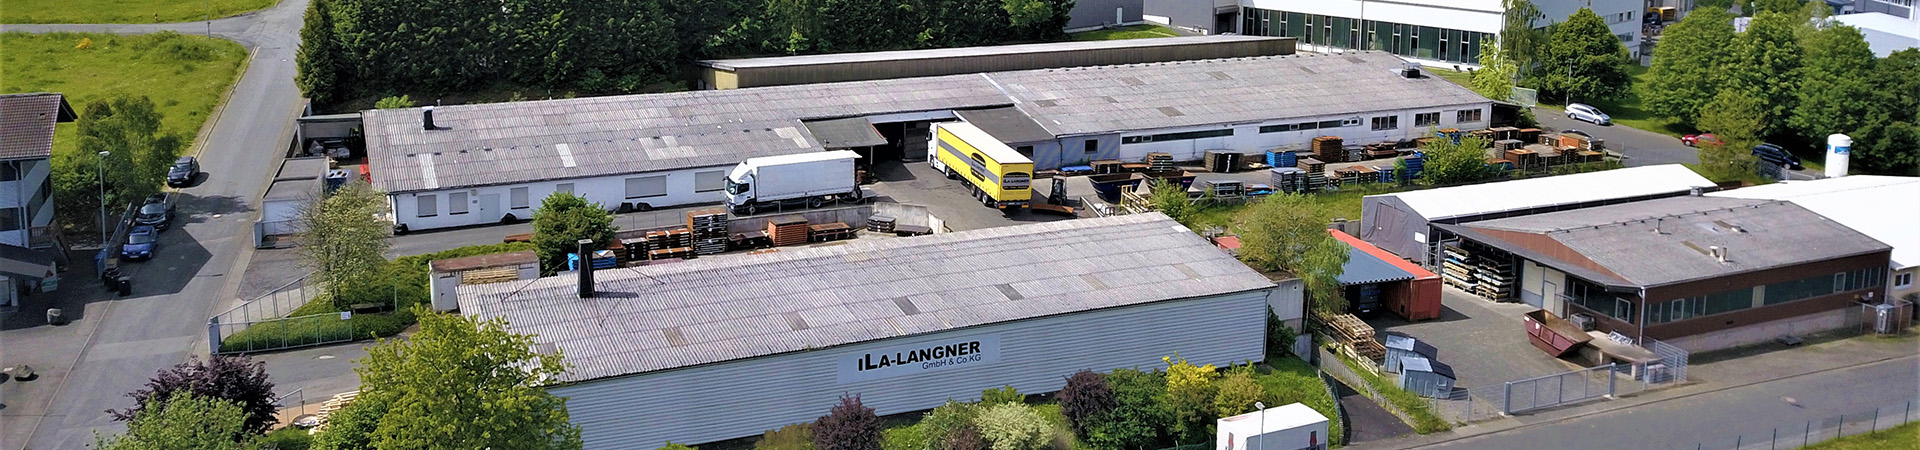 ILA-Langner GmbH & Co KG Cookie guidelines